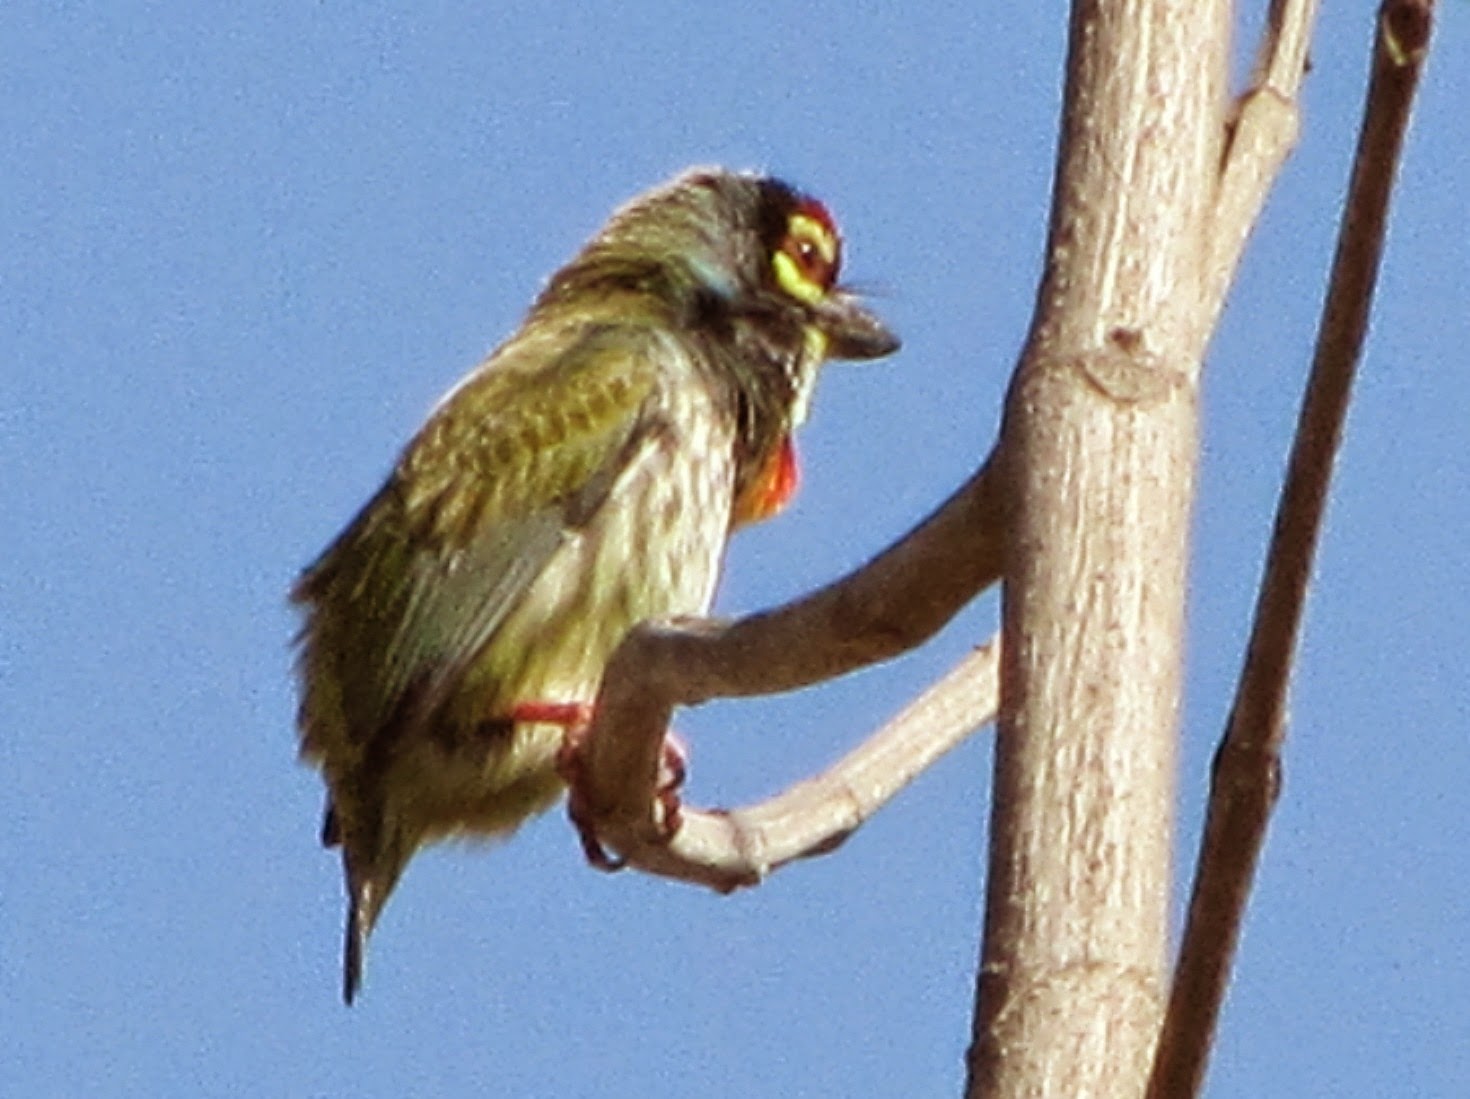 An unidentified species of bird in Kukrail forest